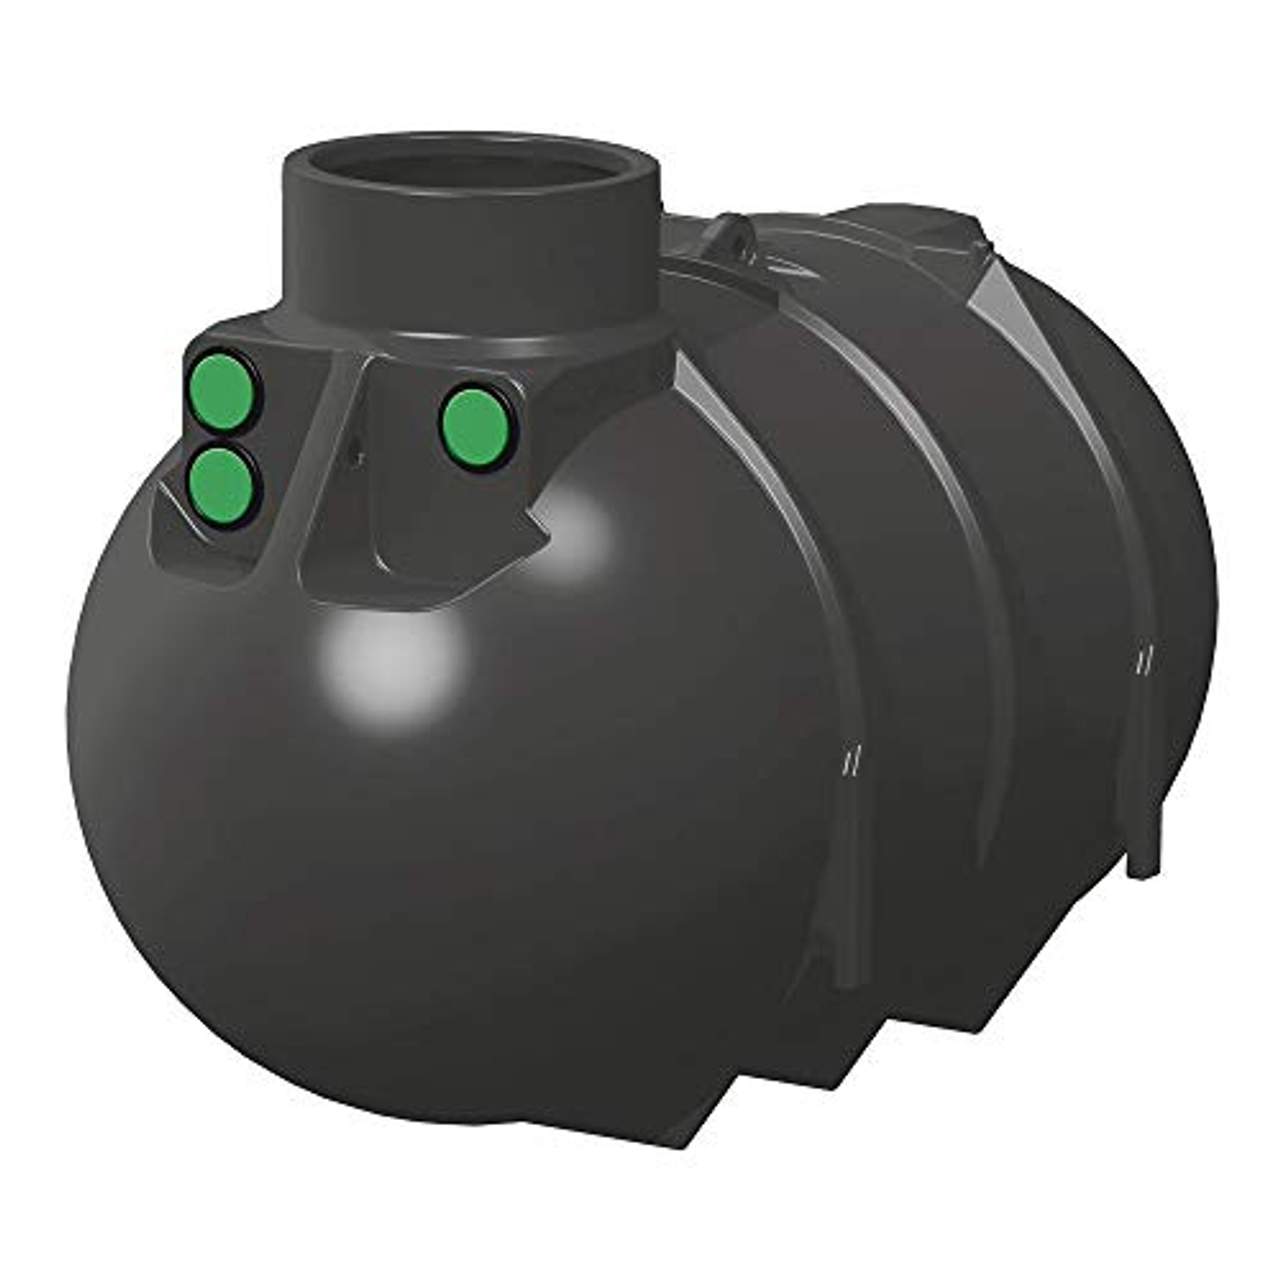 REGENTA Regenwassertank Zisterne 2600 Liter Kompakt